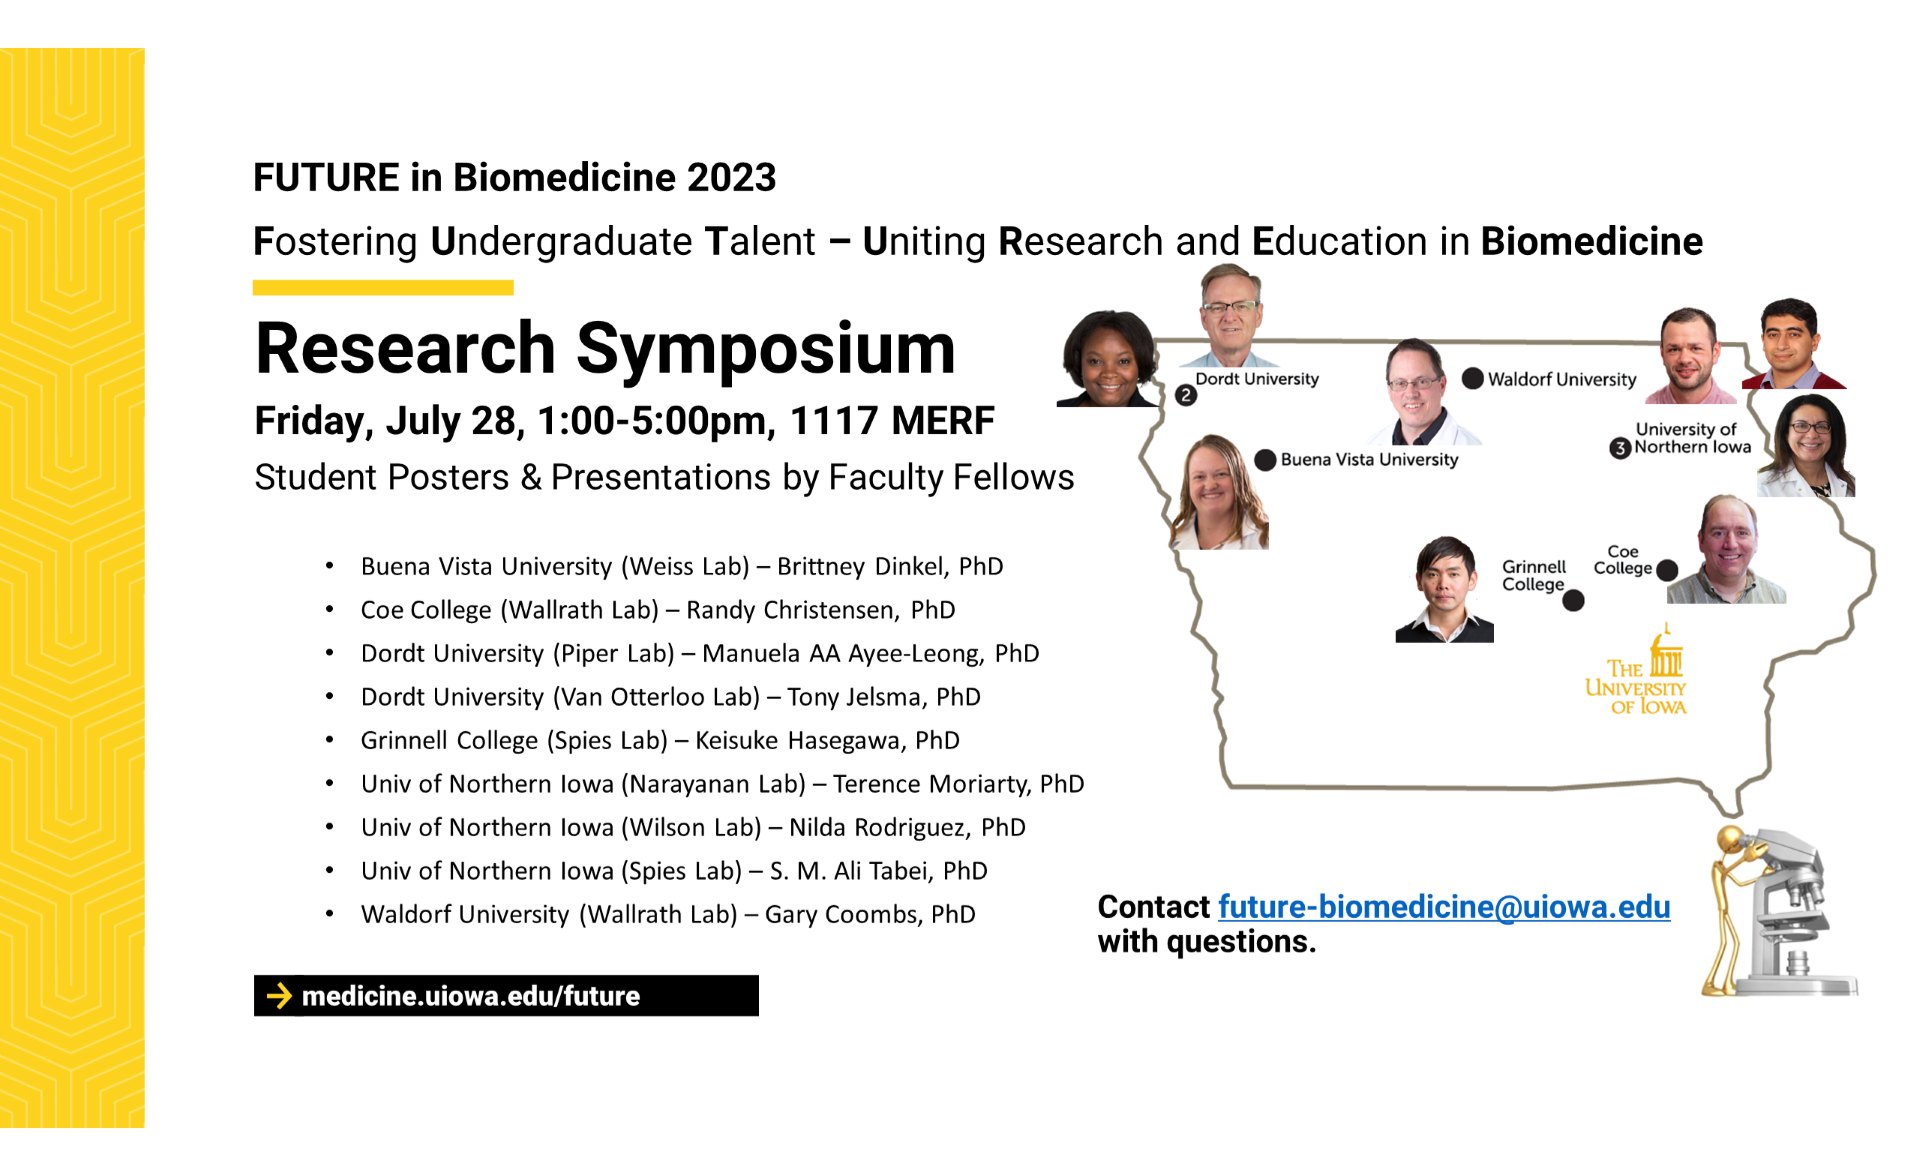 FUTURE in Biomedicine - Research Symposium 7.28.23